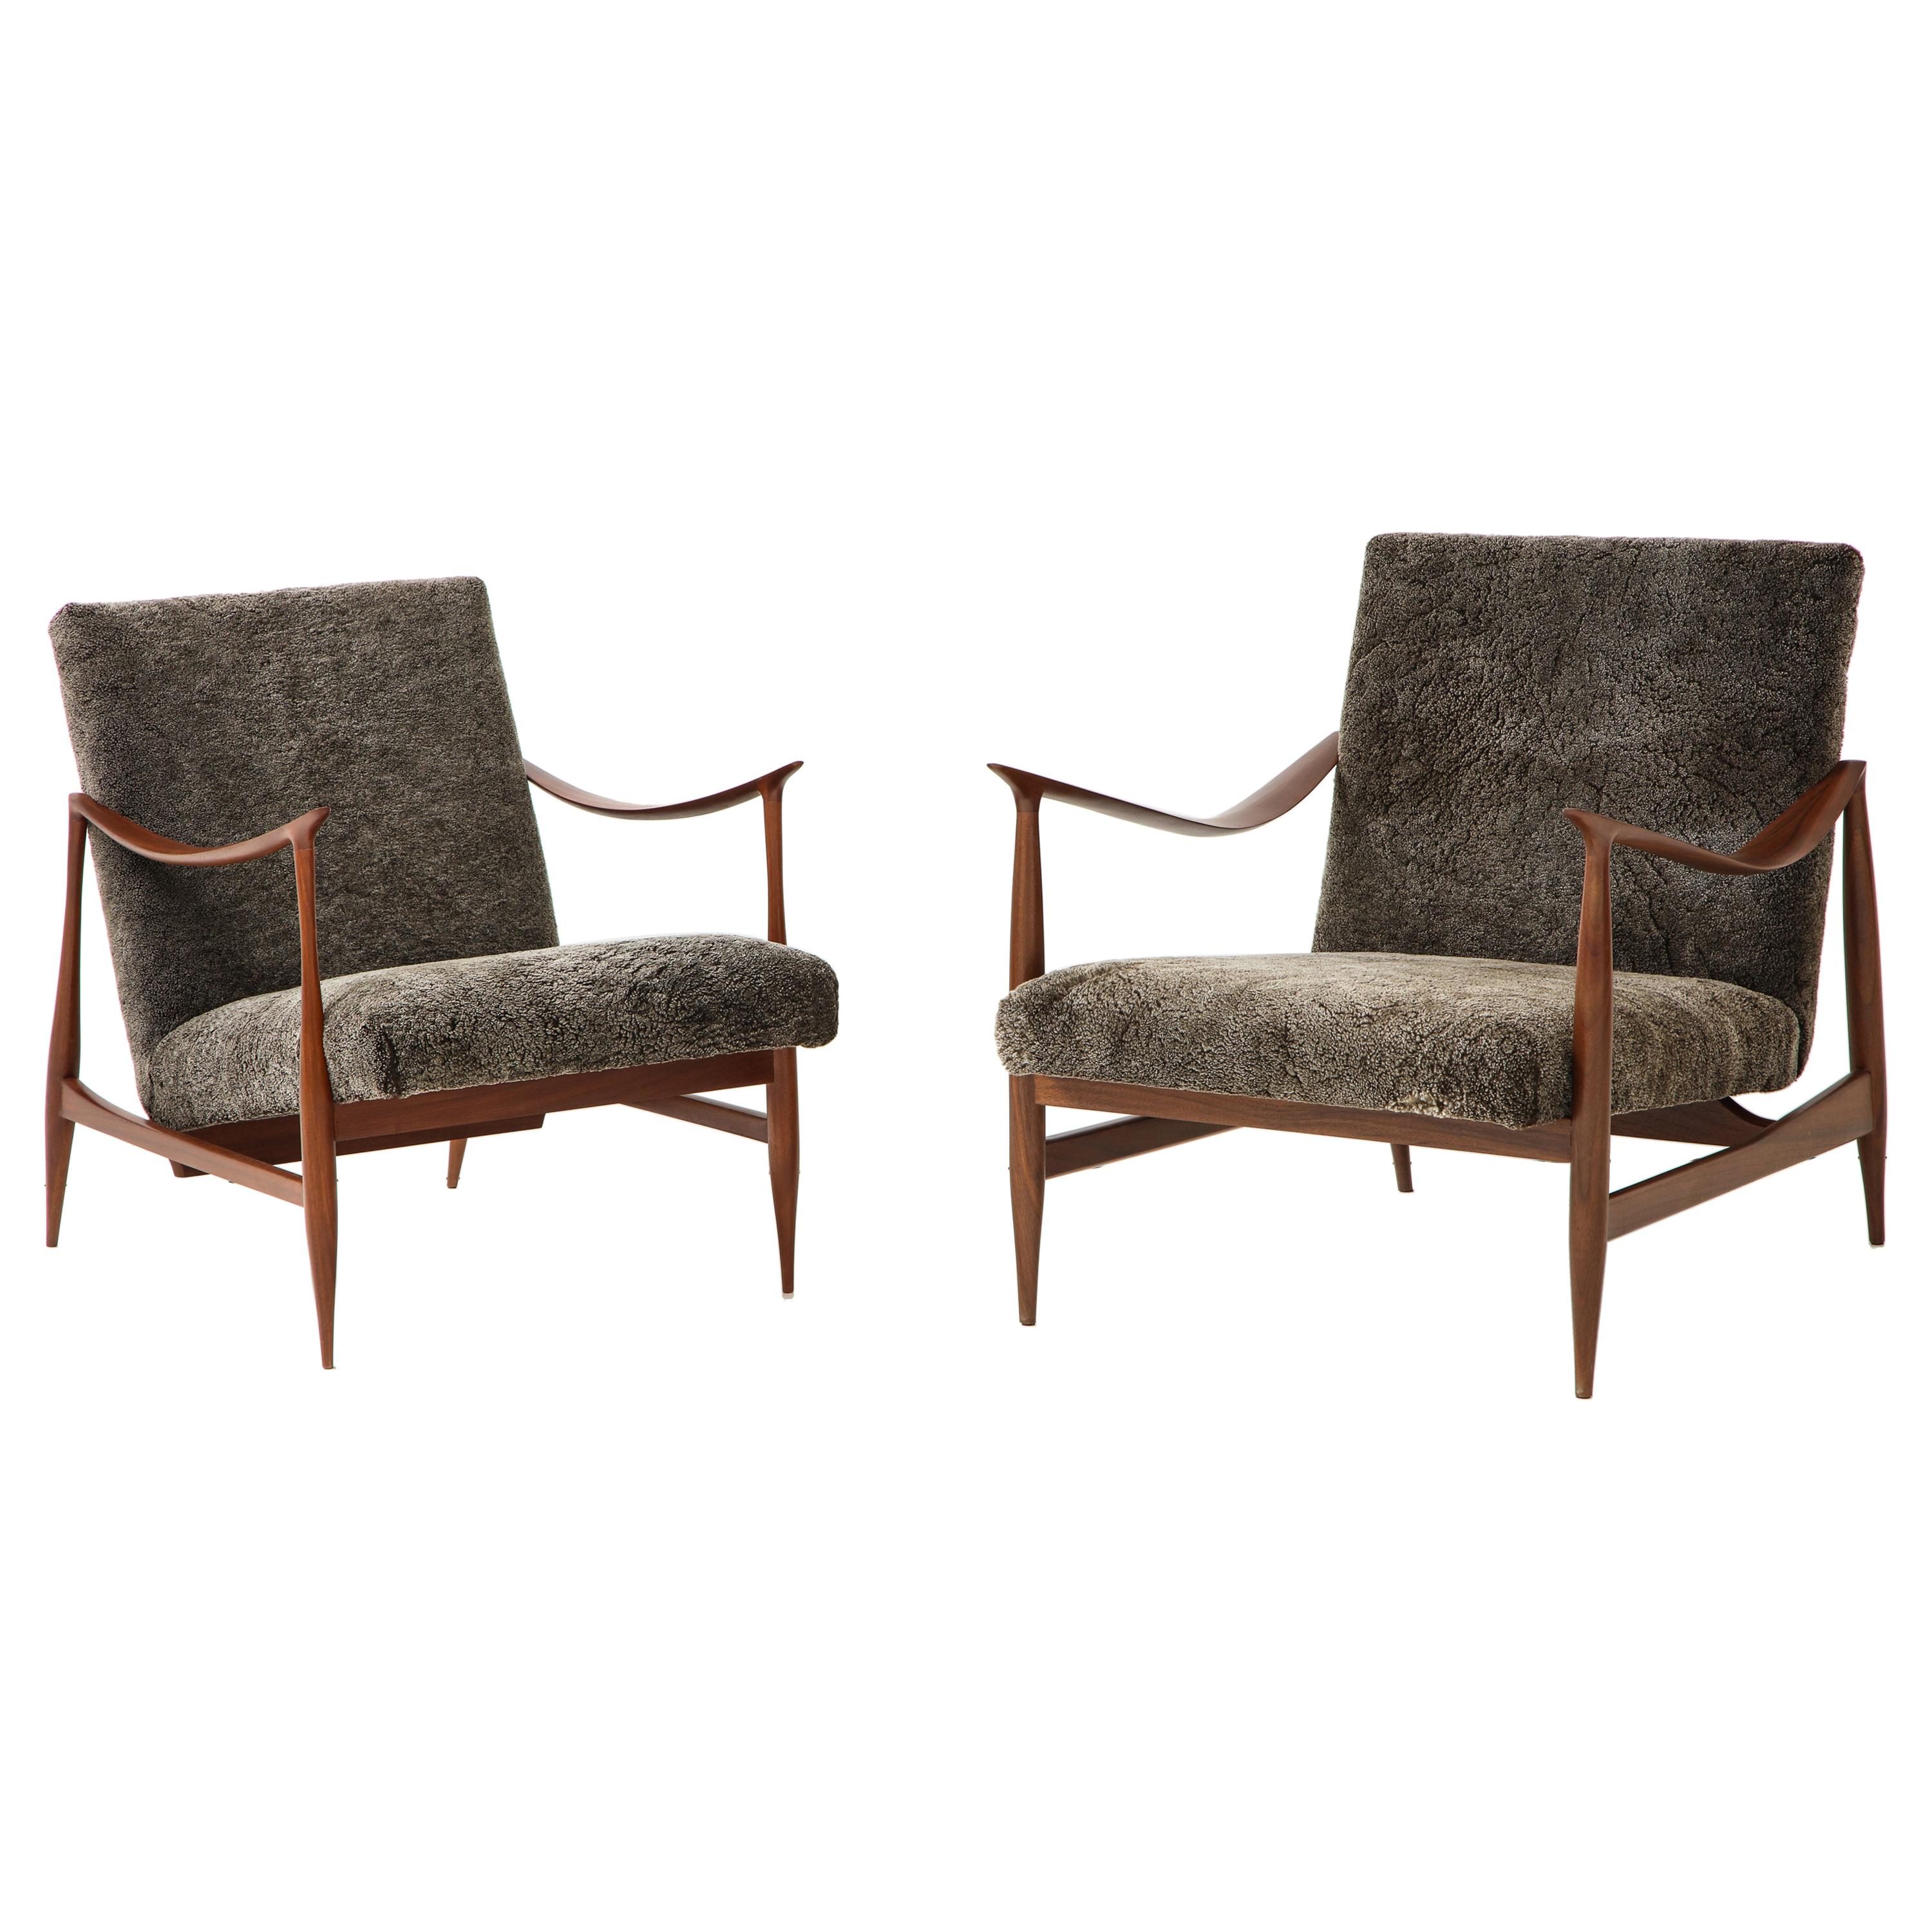 Brazilian Style Lounge Chairs with Walnut Frames & Lamb's Wool Upholstery